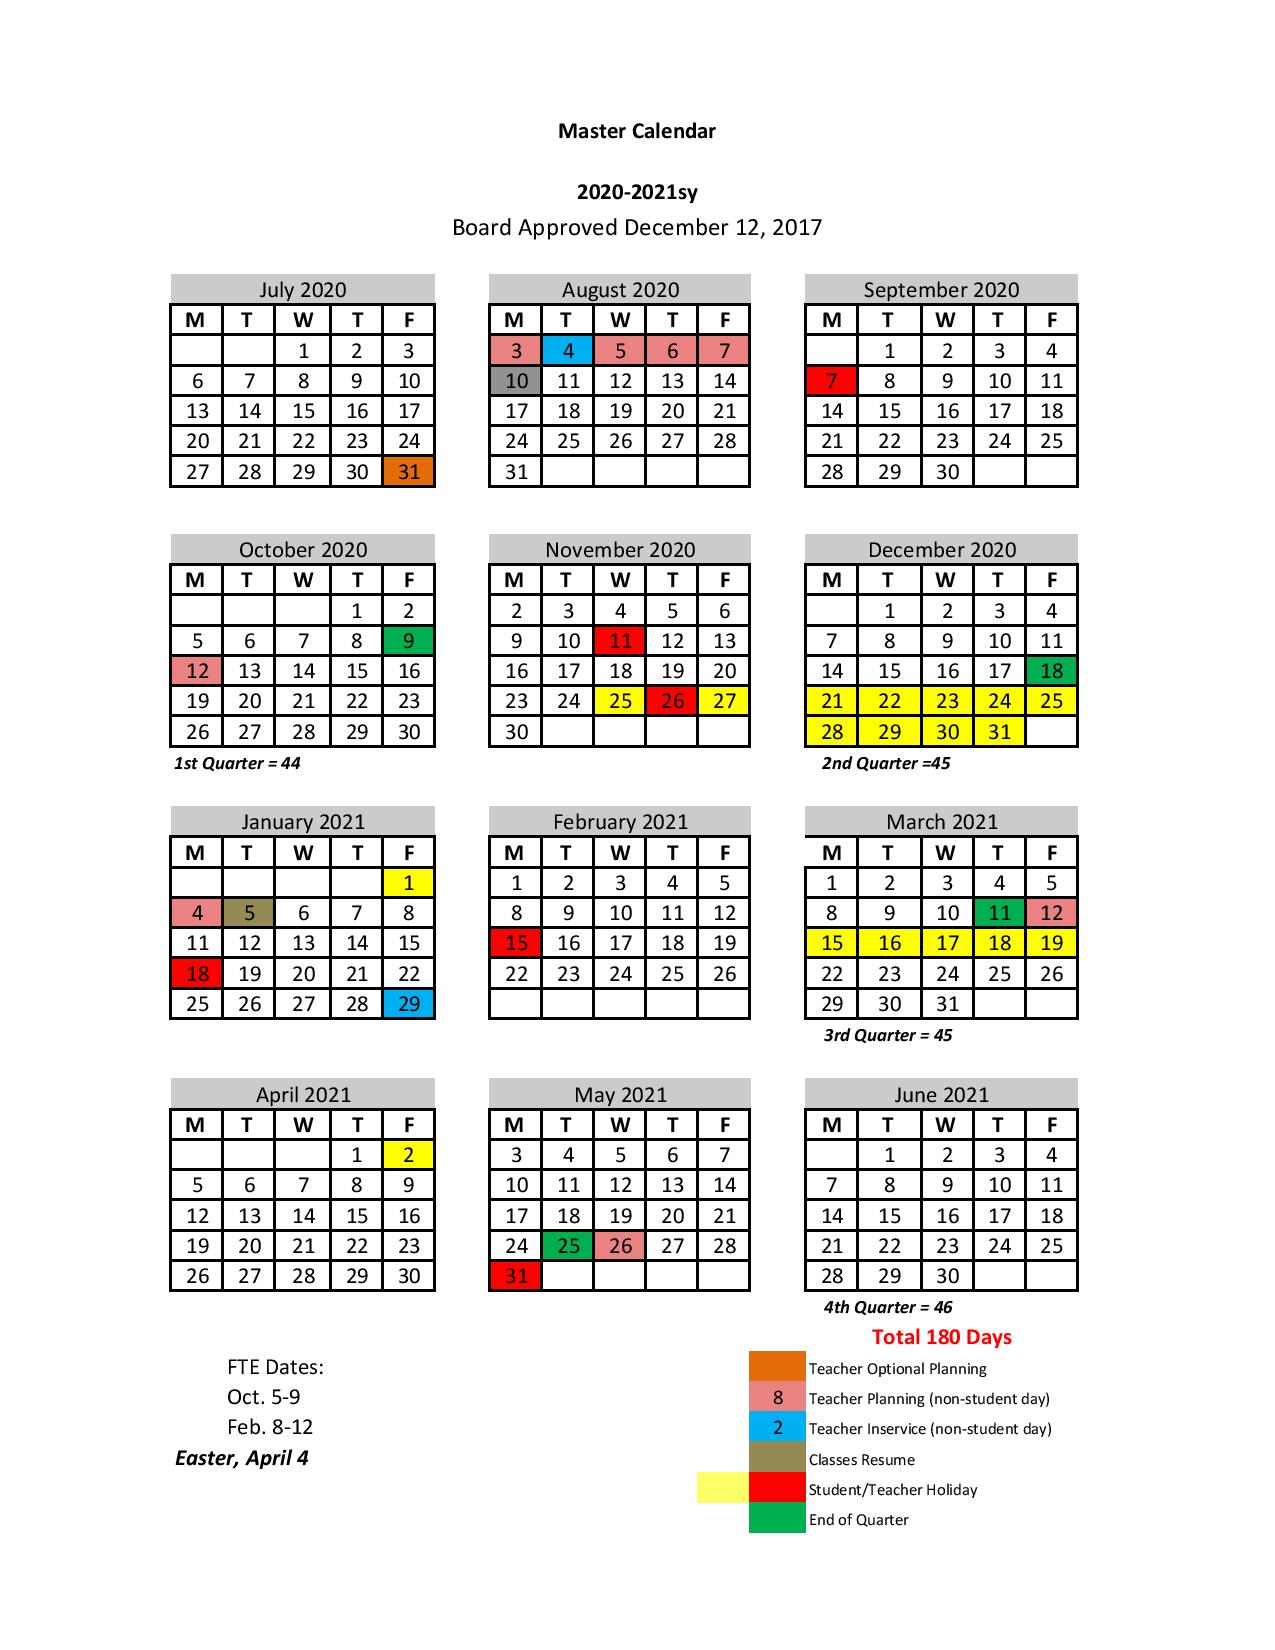 St Johns County School District Calendar 20202021